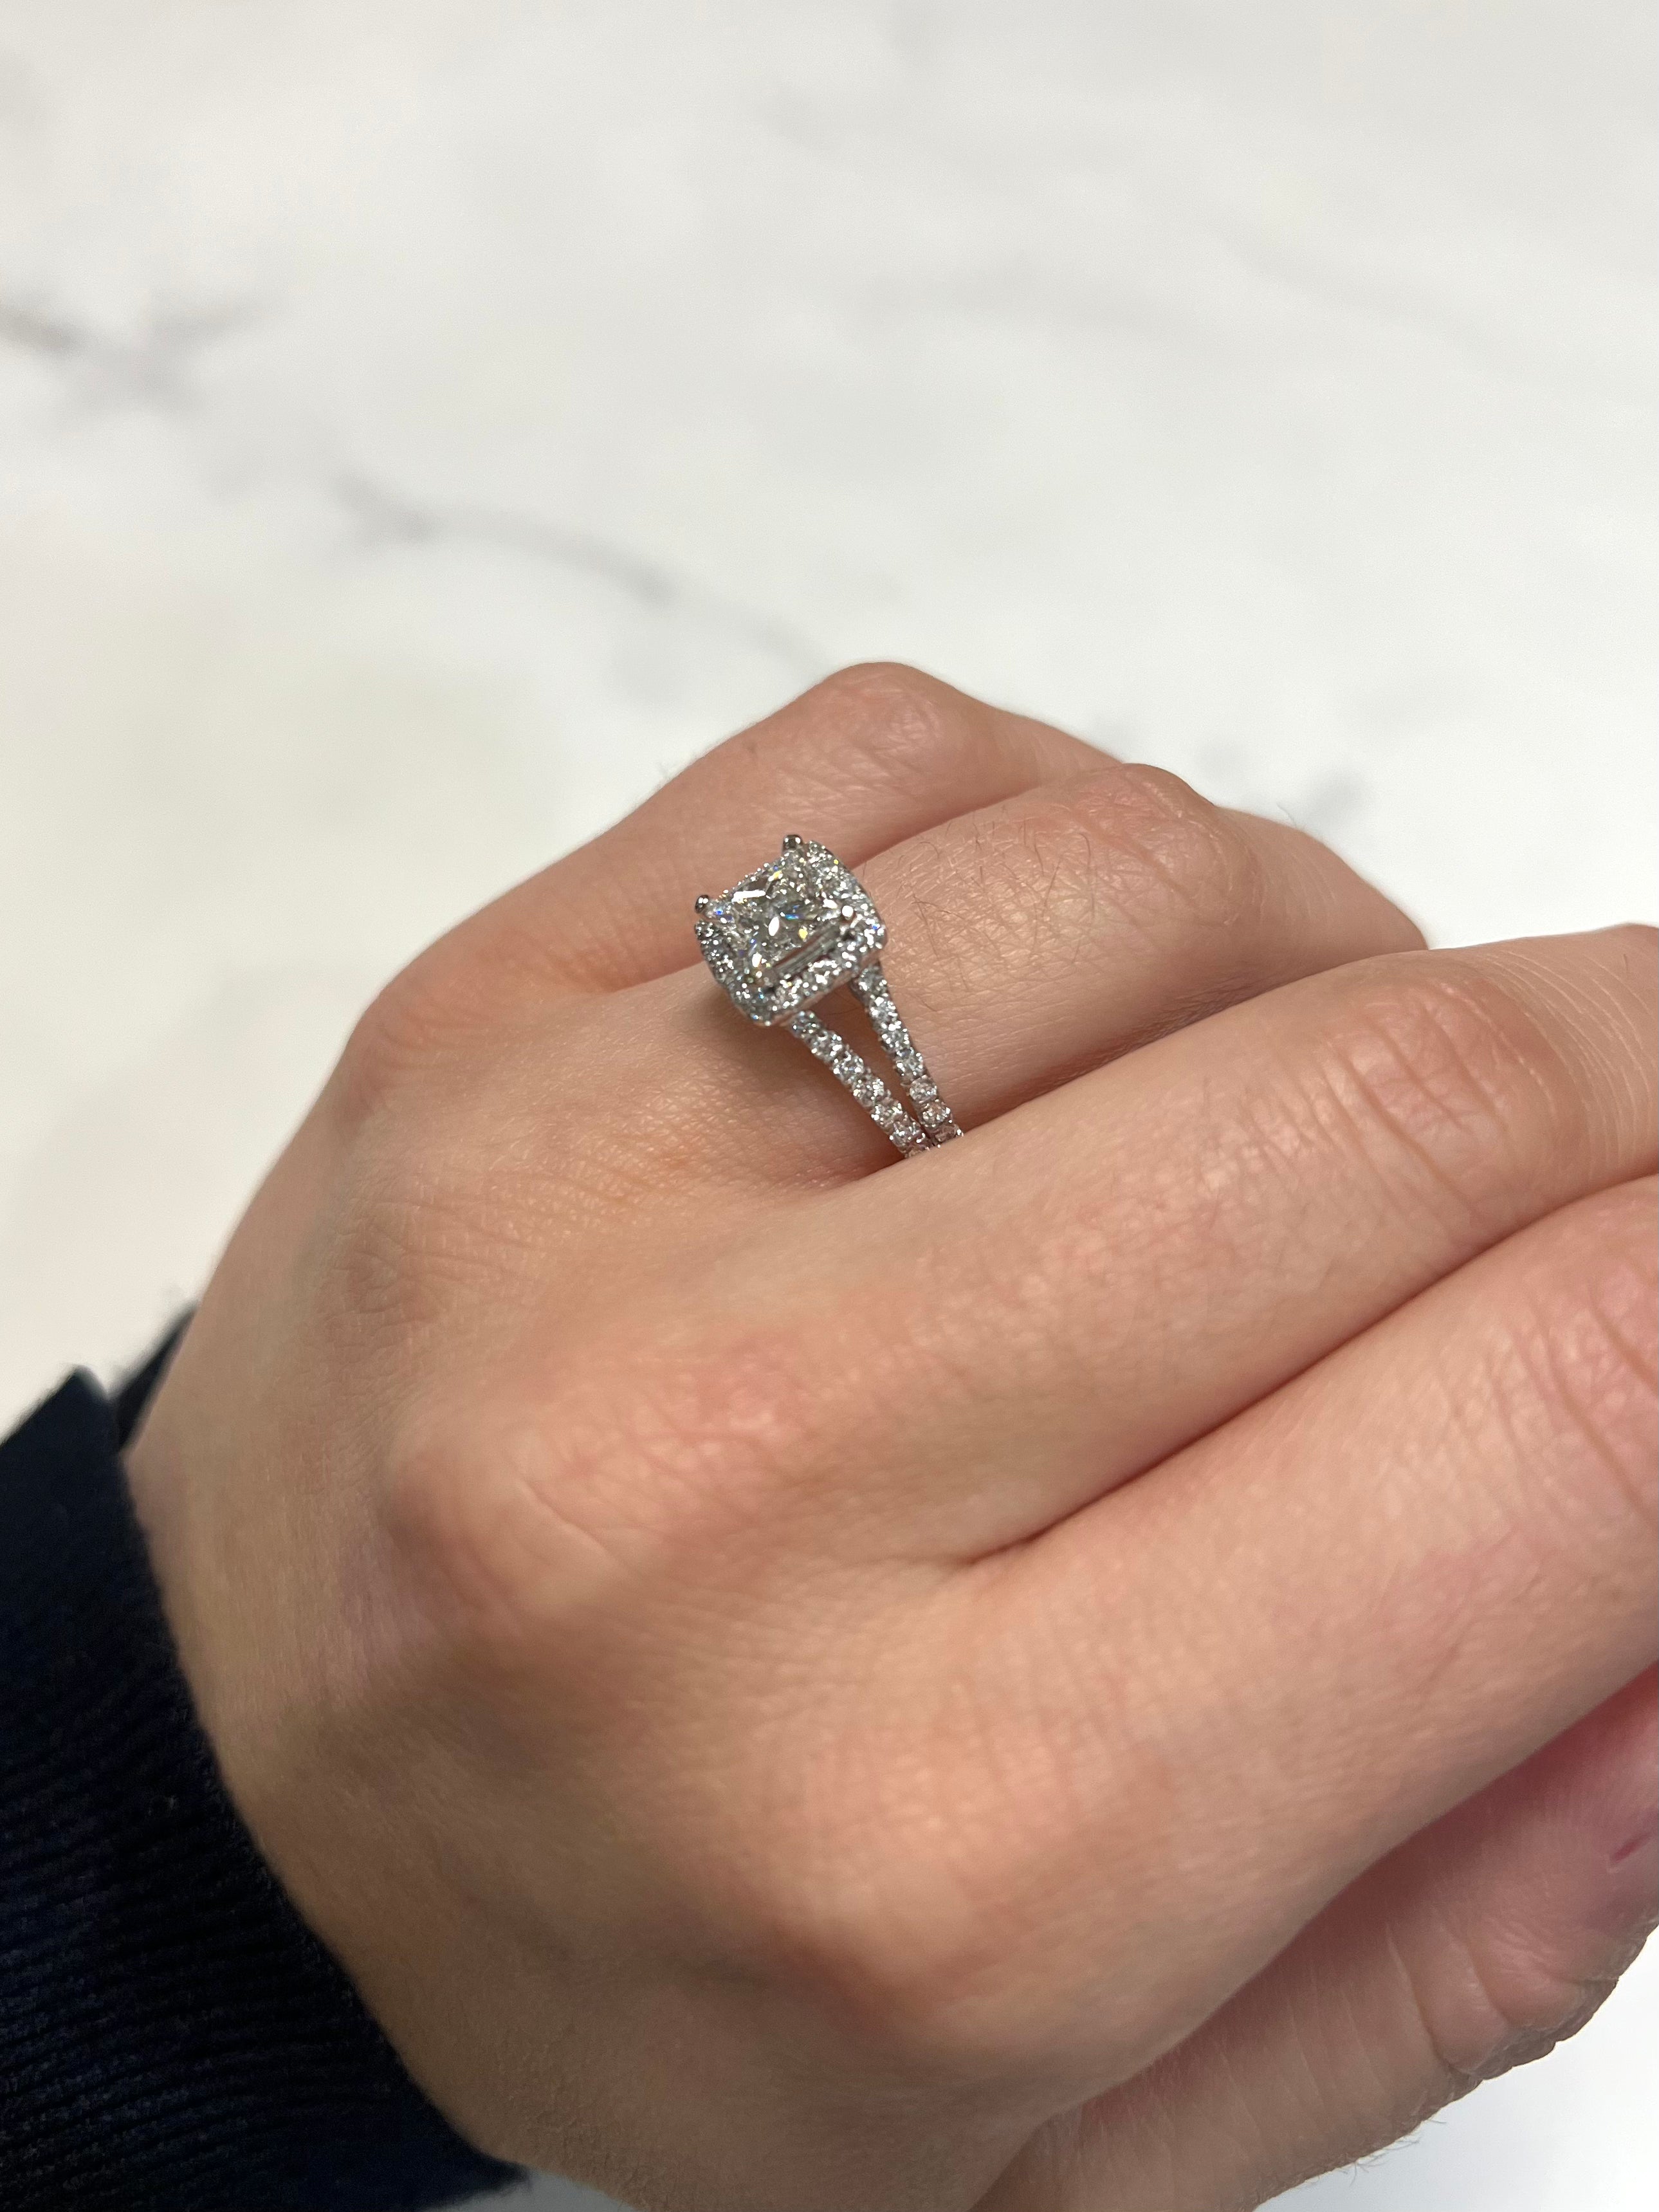 White Gold 1.47ct Princess Engagement Ring